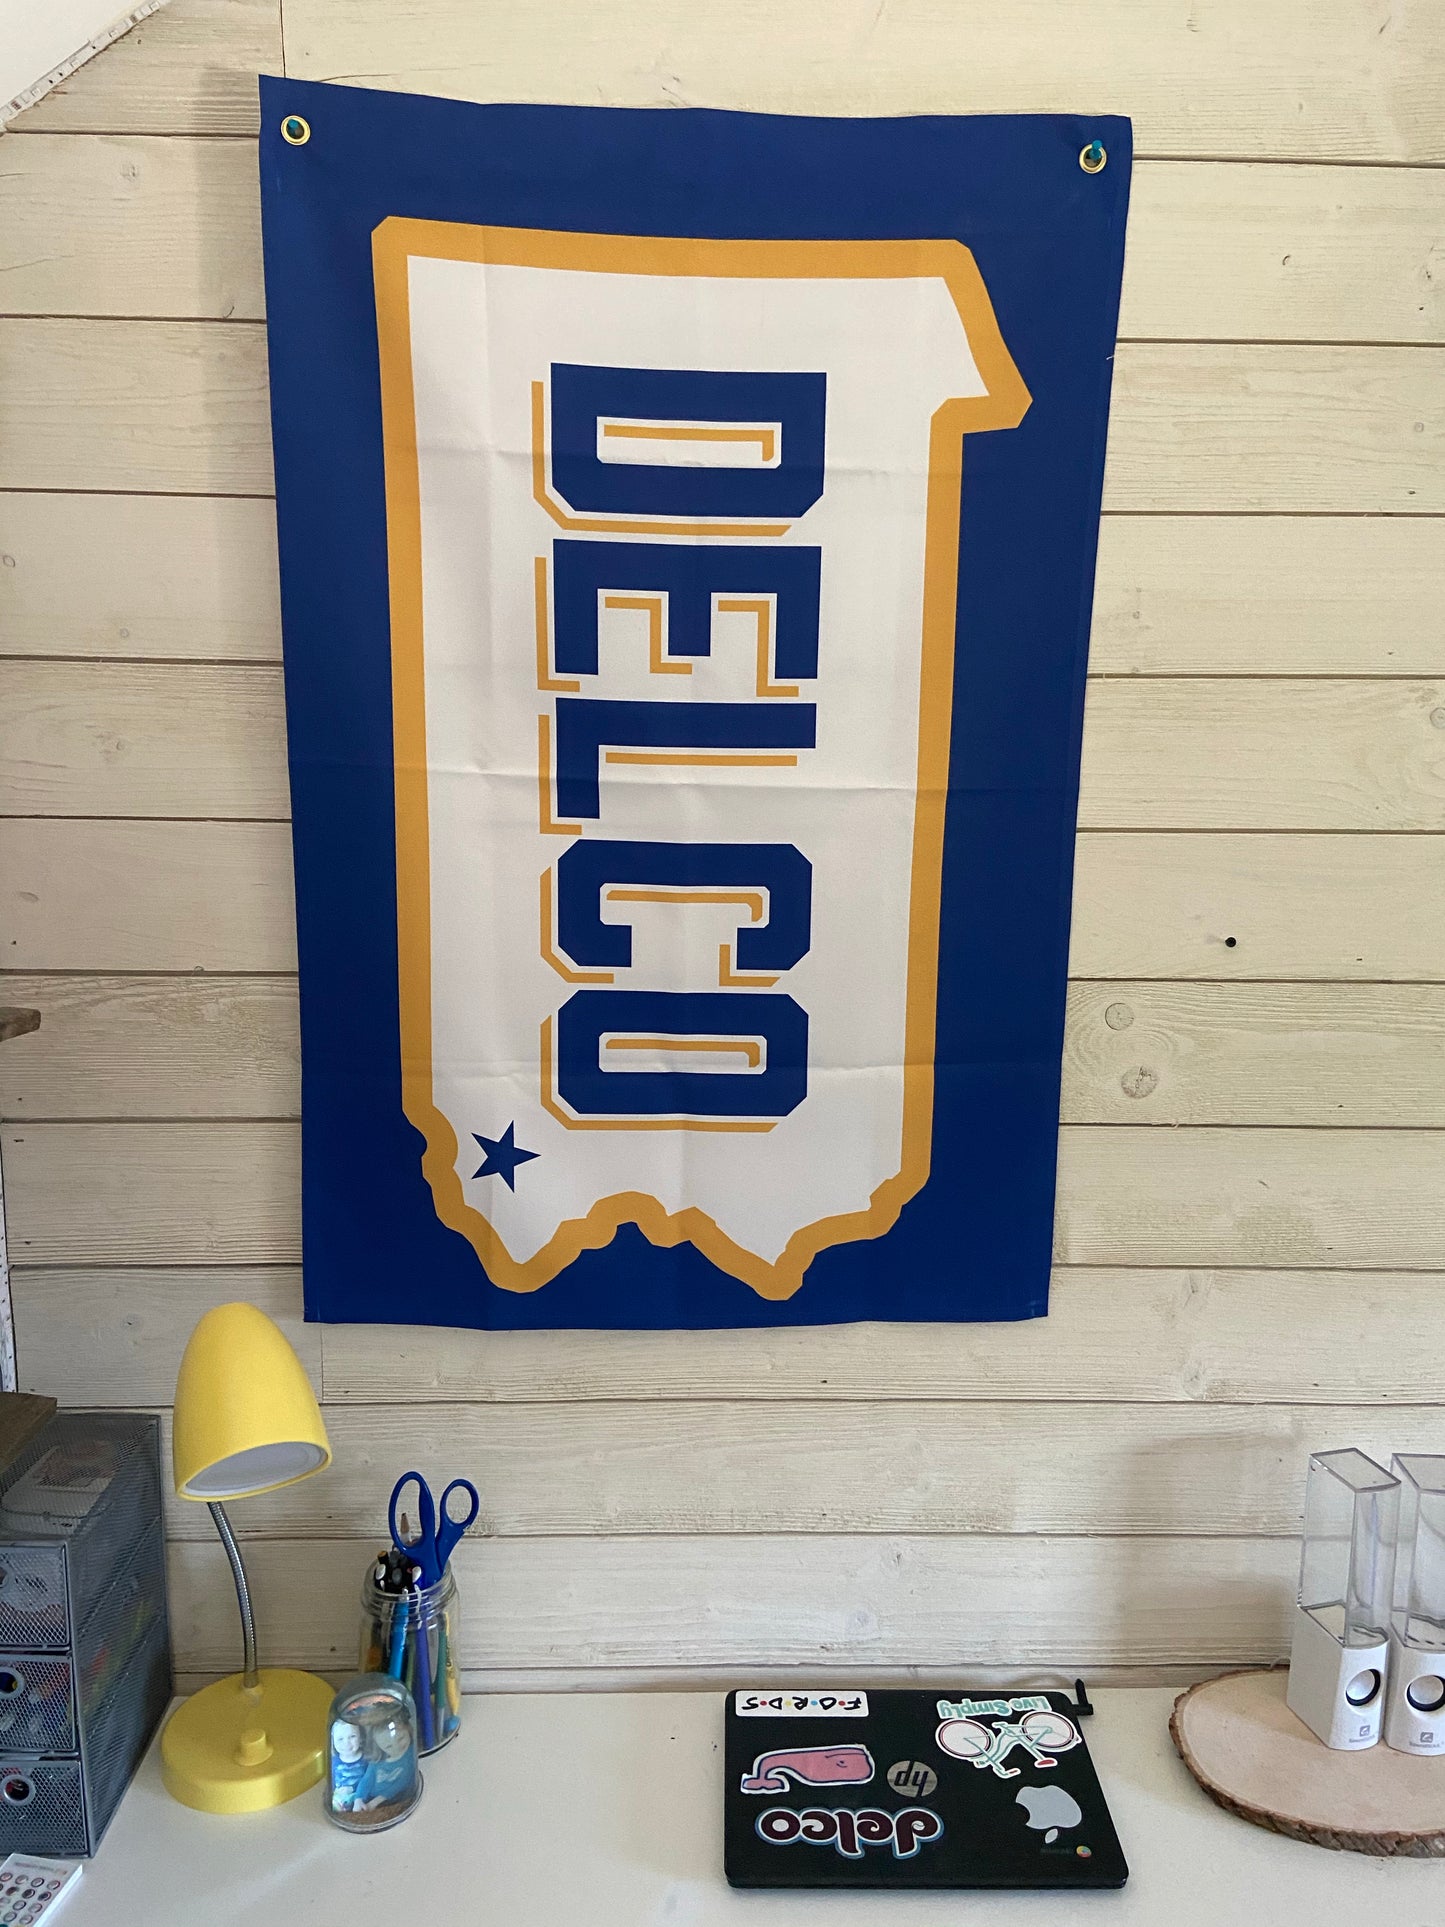 DELCO Cougar / Pitt / Delaware Dorm Flag